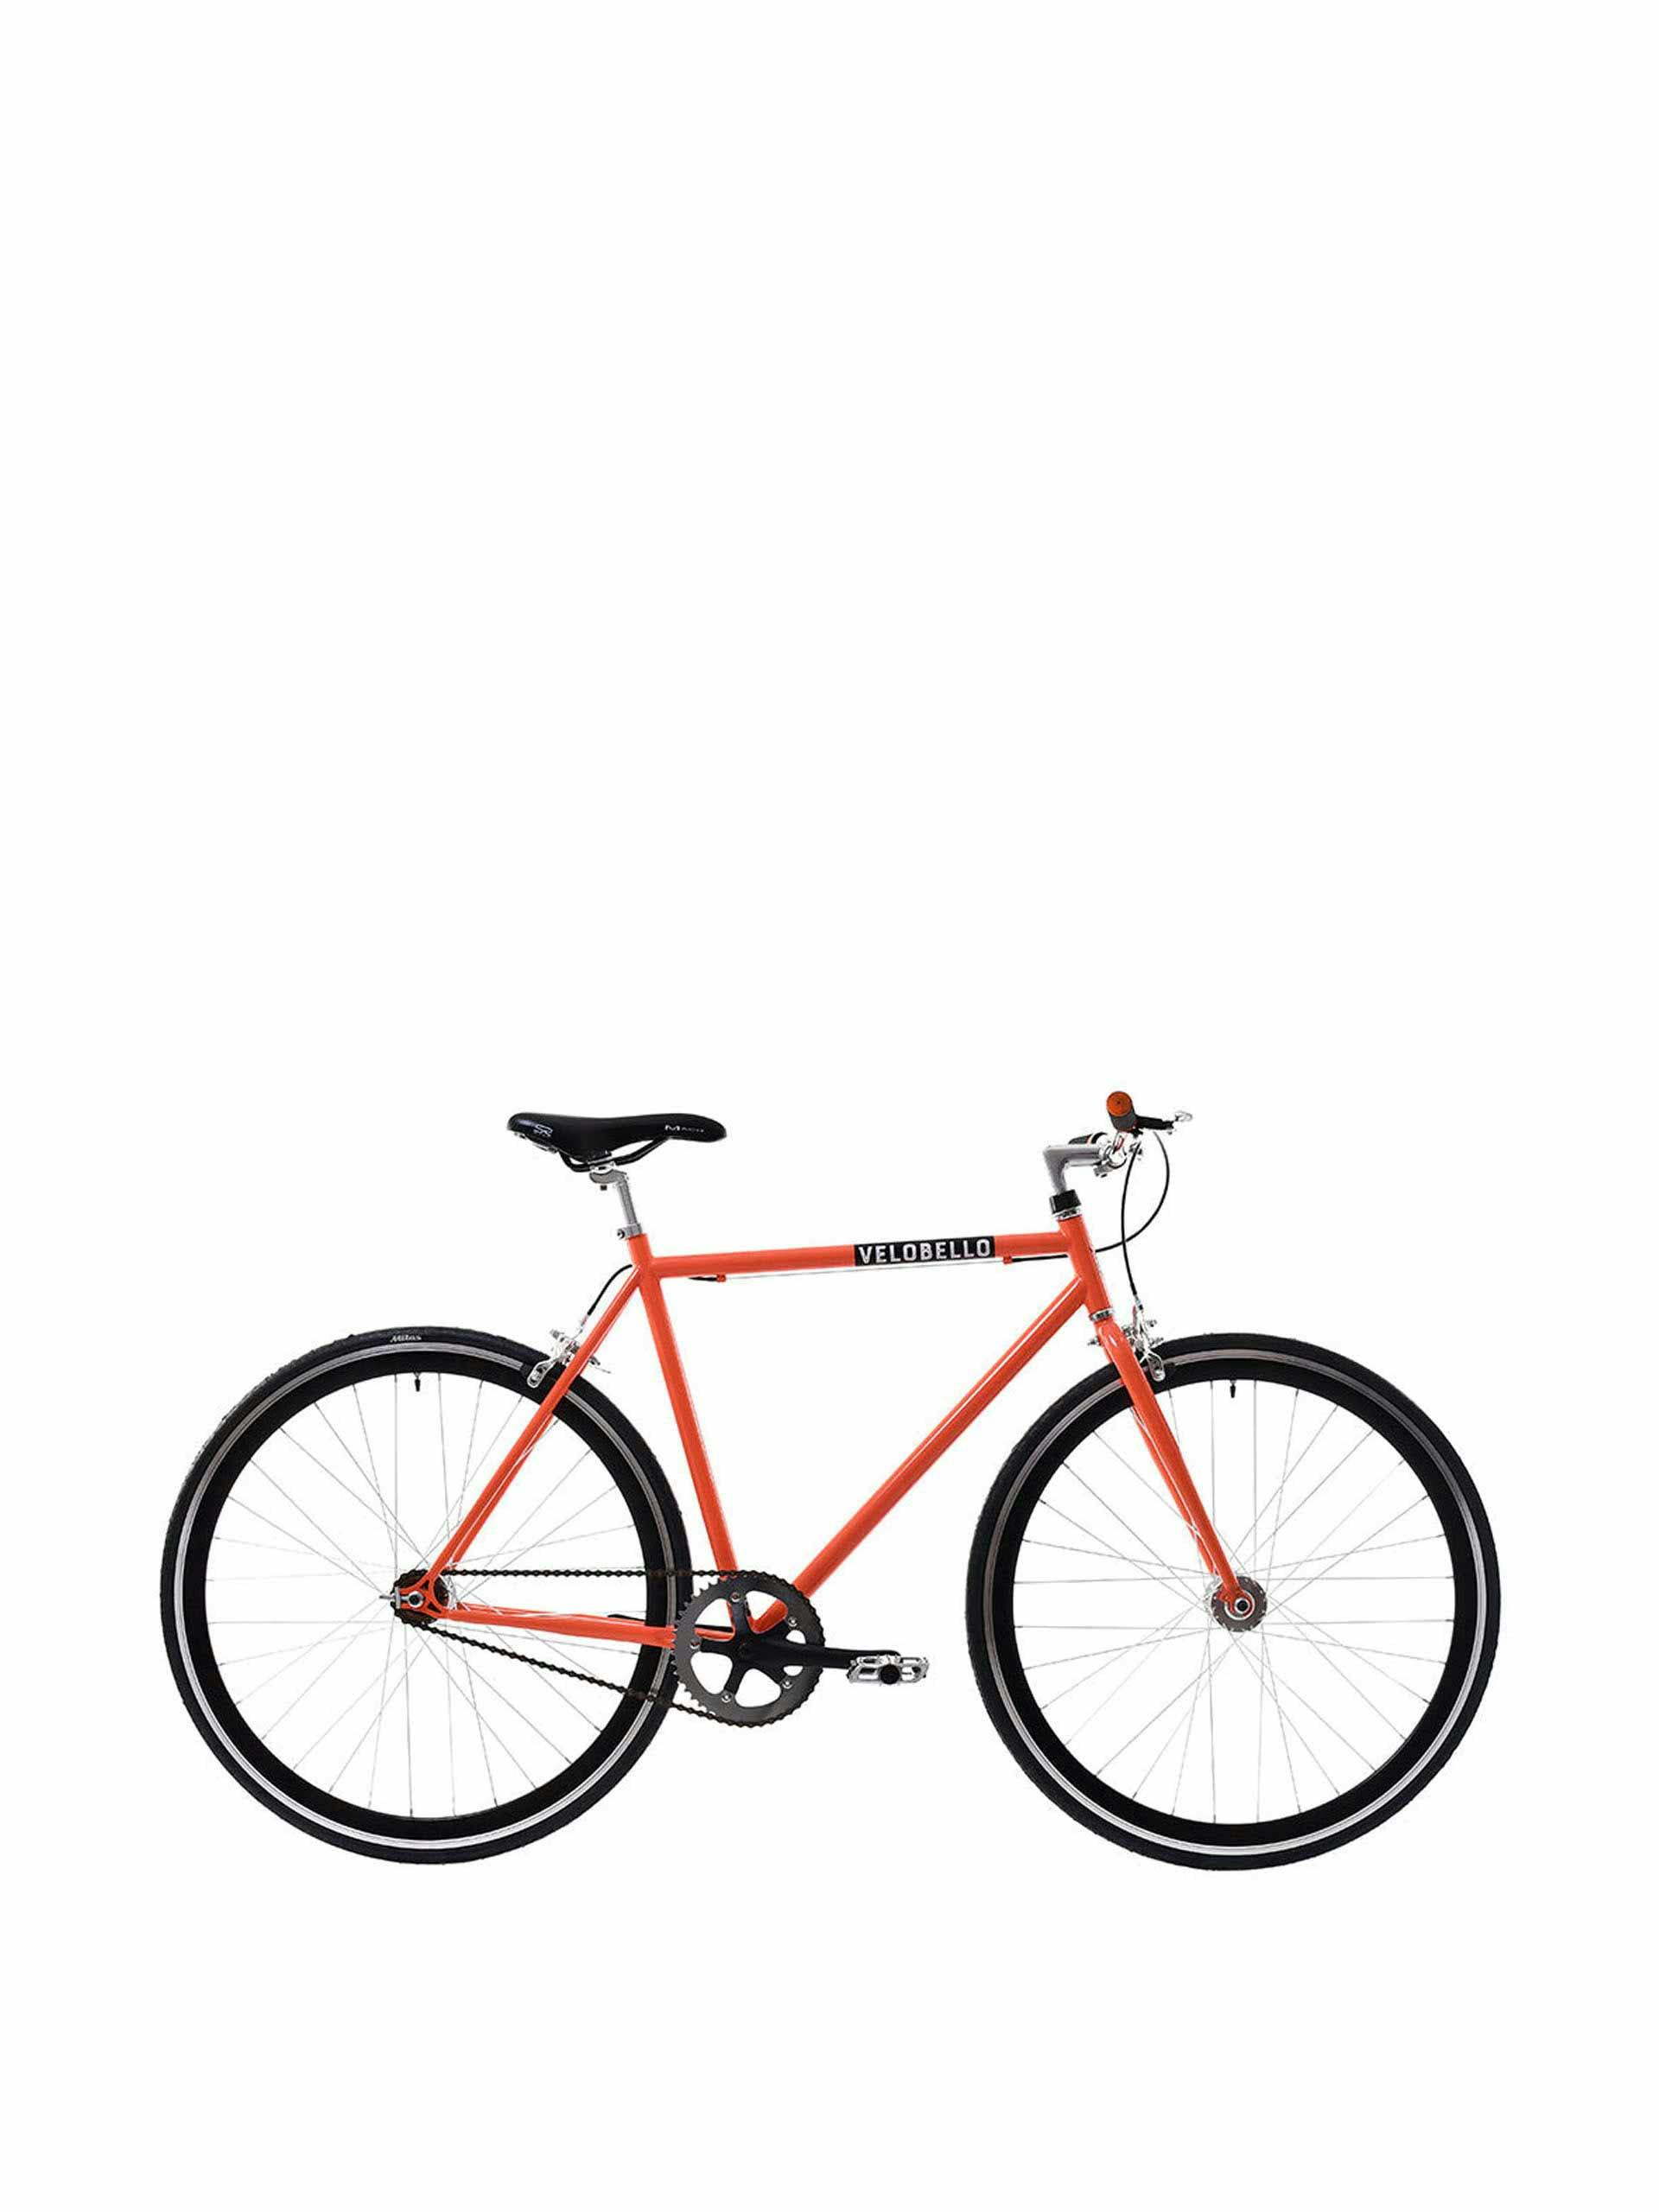 Soho orange urban street bike